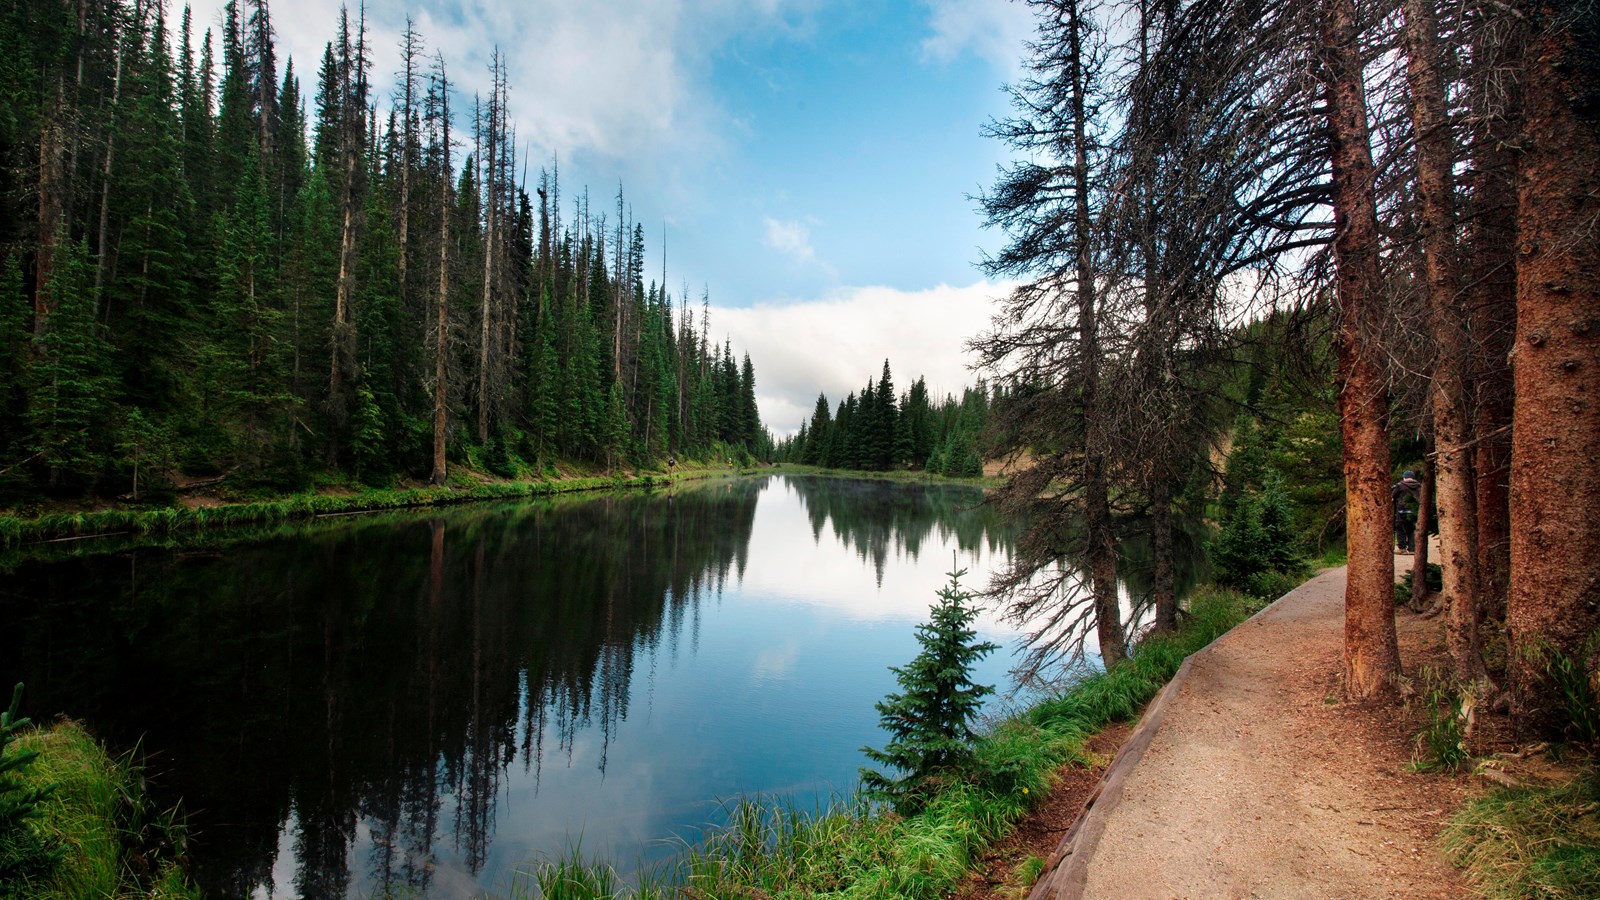 a path and trees line a trail around a calm lake